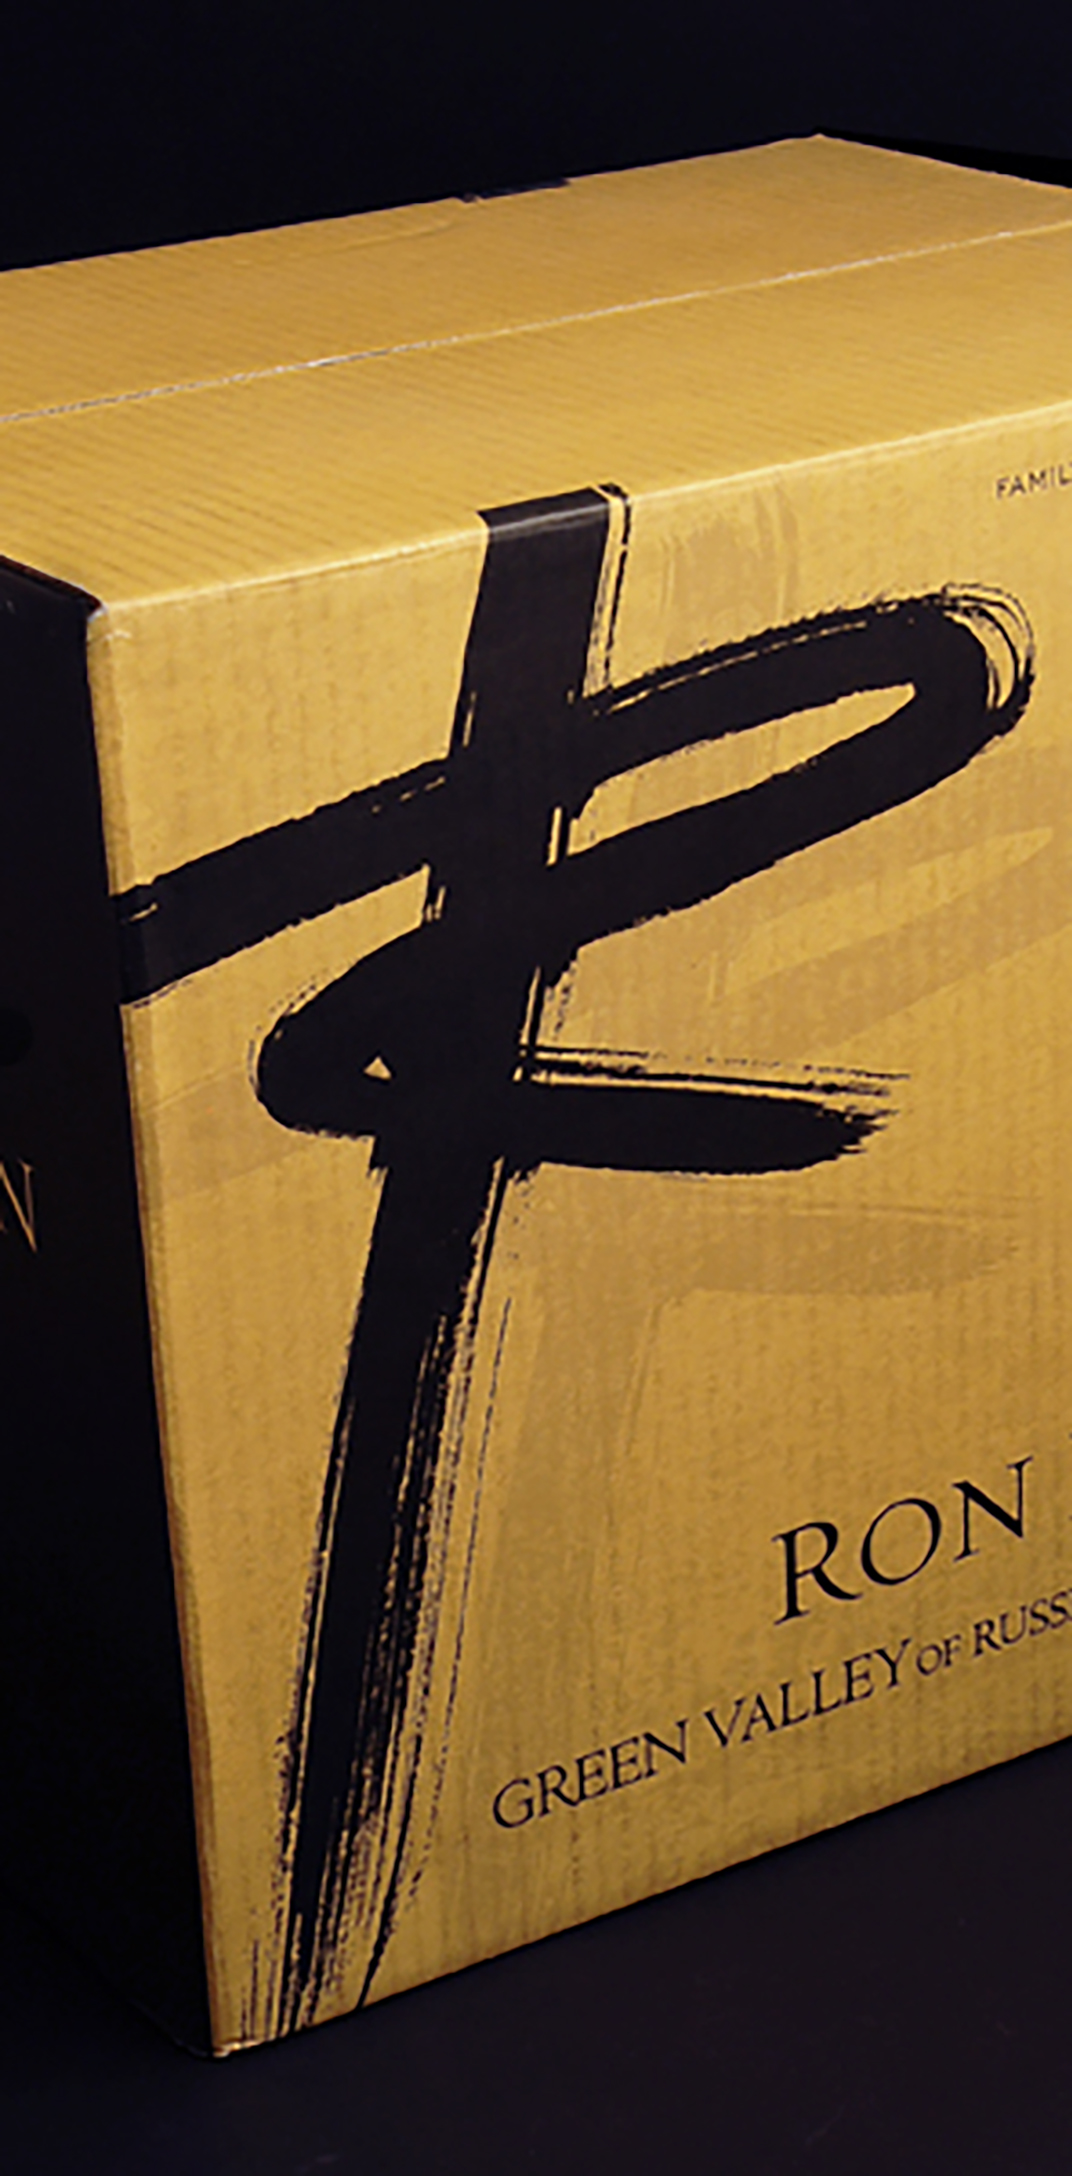 Ron Rubin Winery Green Valley Pinot Noir Wine Shipper Design